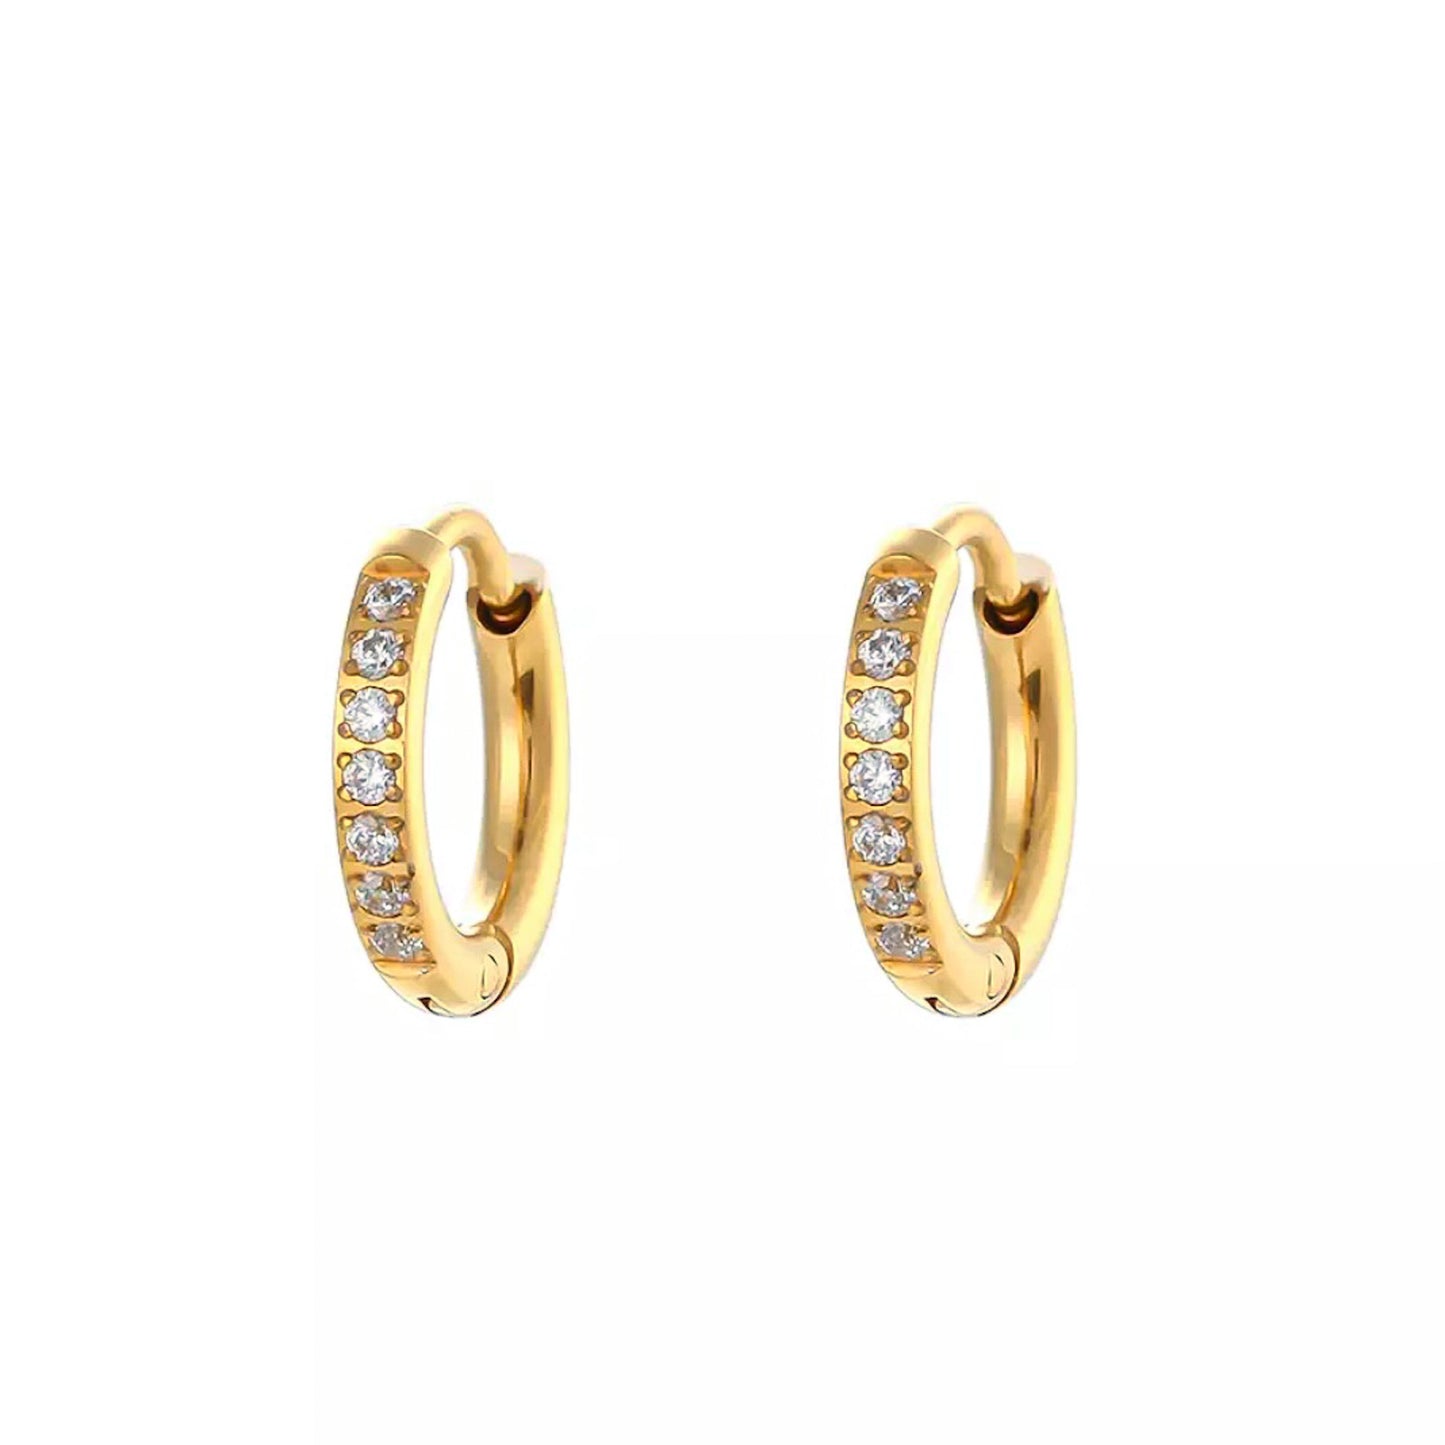 Colton Mini Hoop Earrings│18k Gold Plated